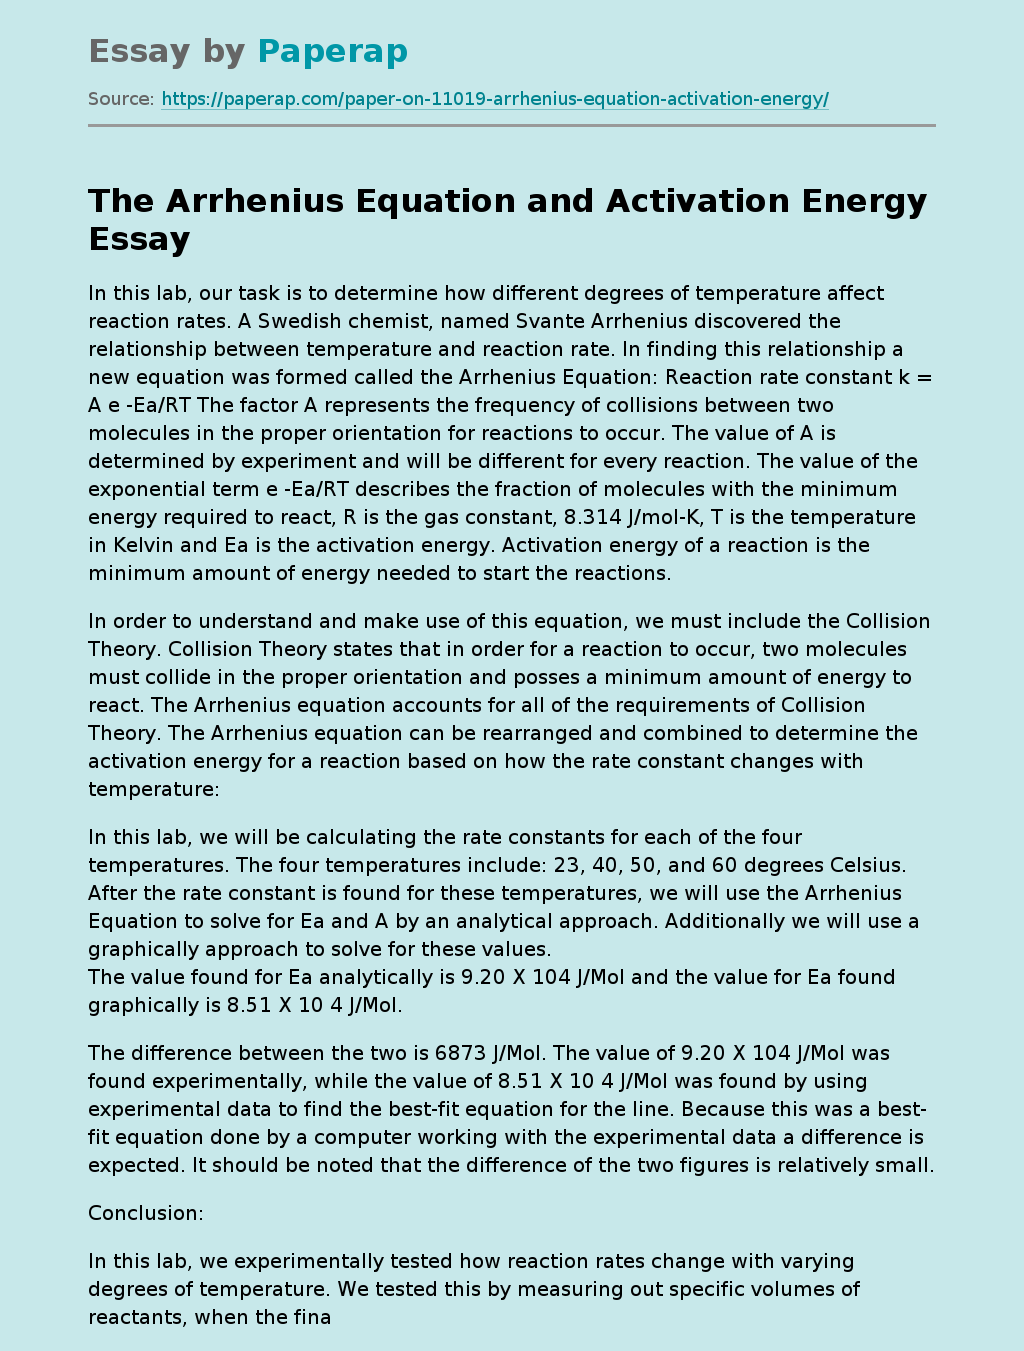 The Arrhenius Equation and Activation Energy